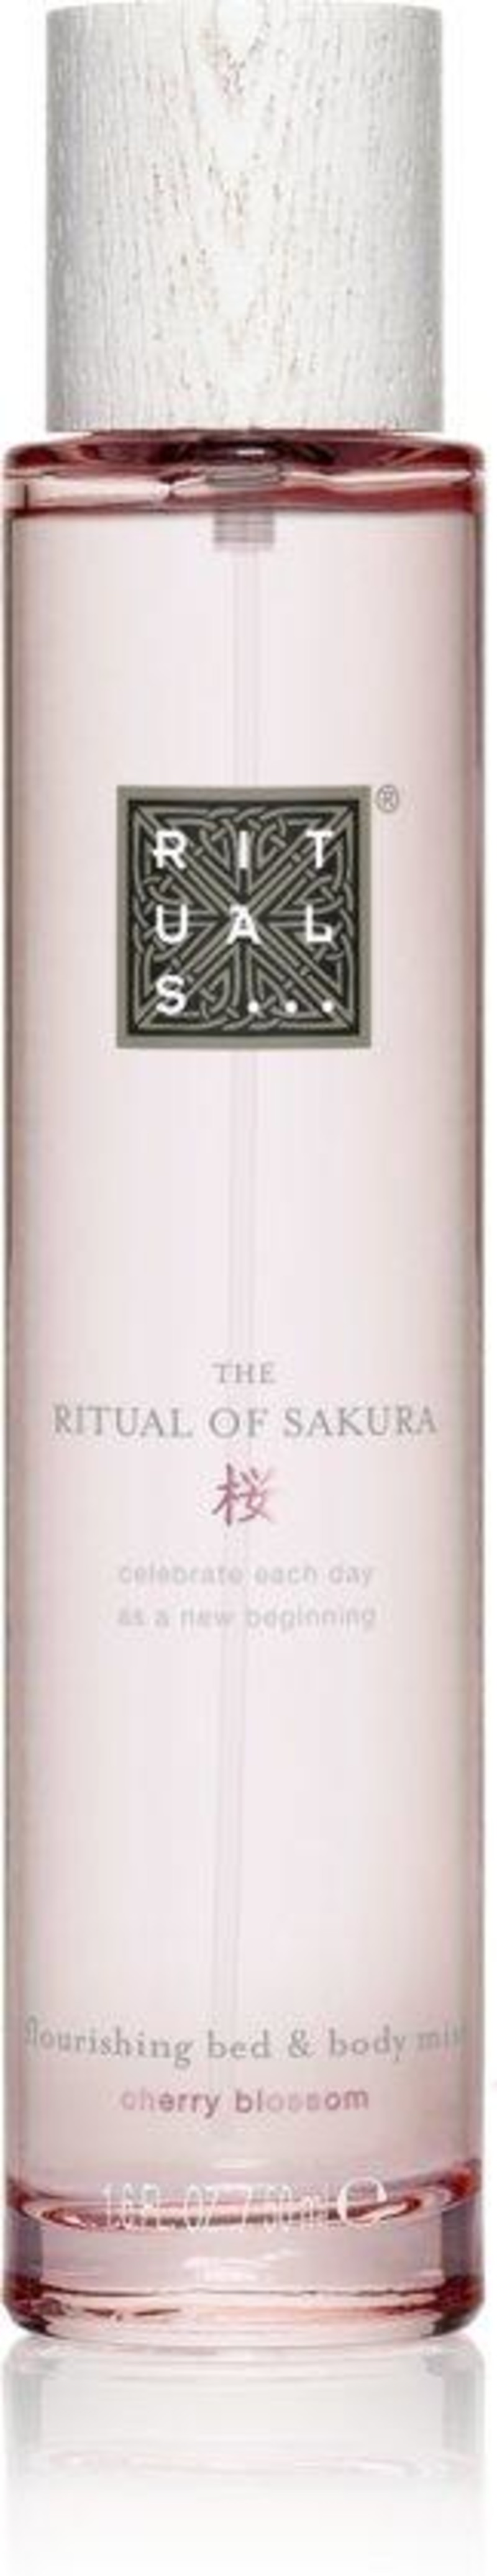 RITUALS The Ritual of Sakura Hair & Body Mist Damesparfum - 50ml